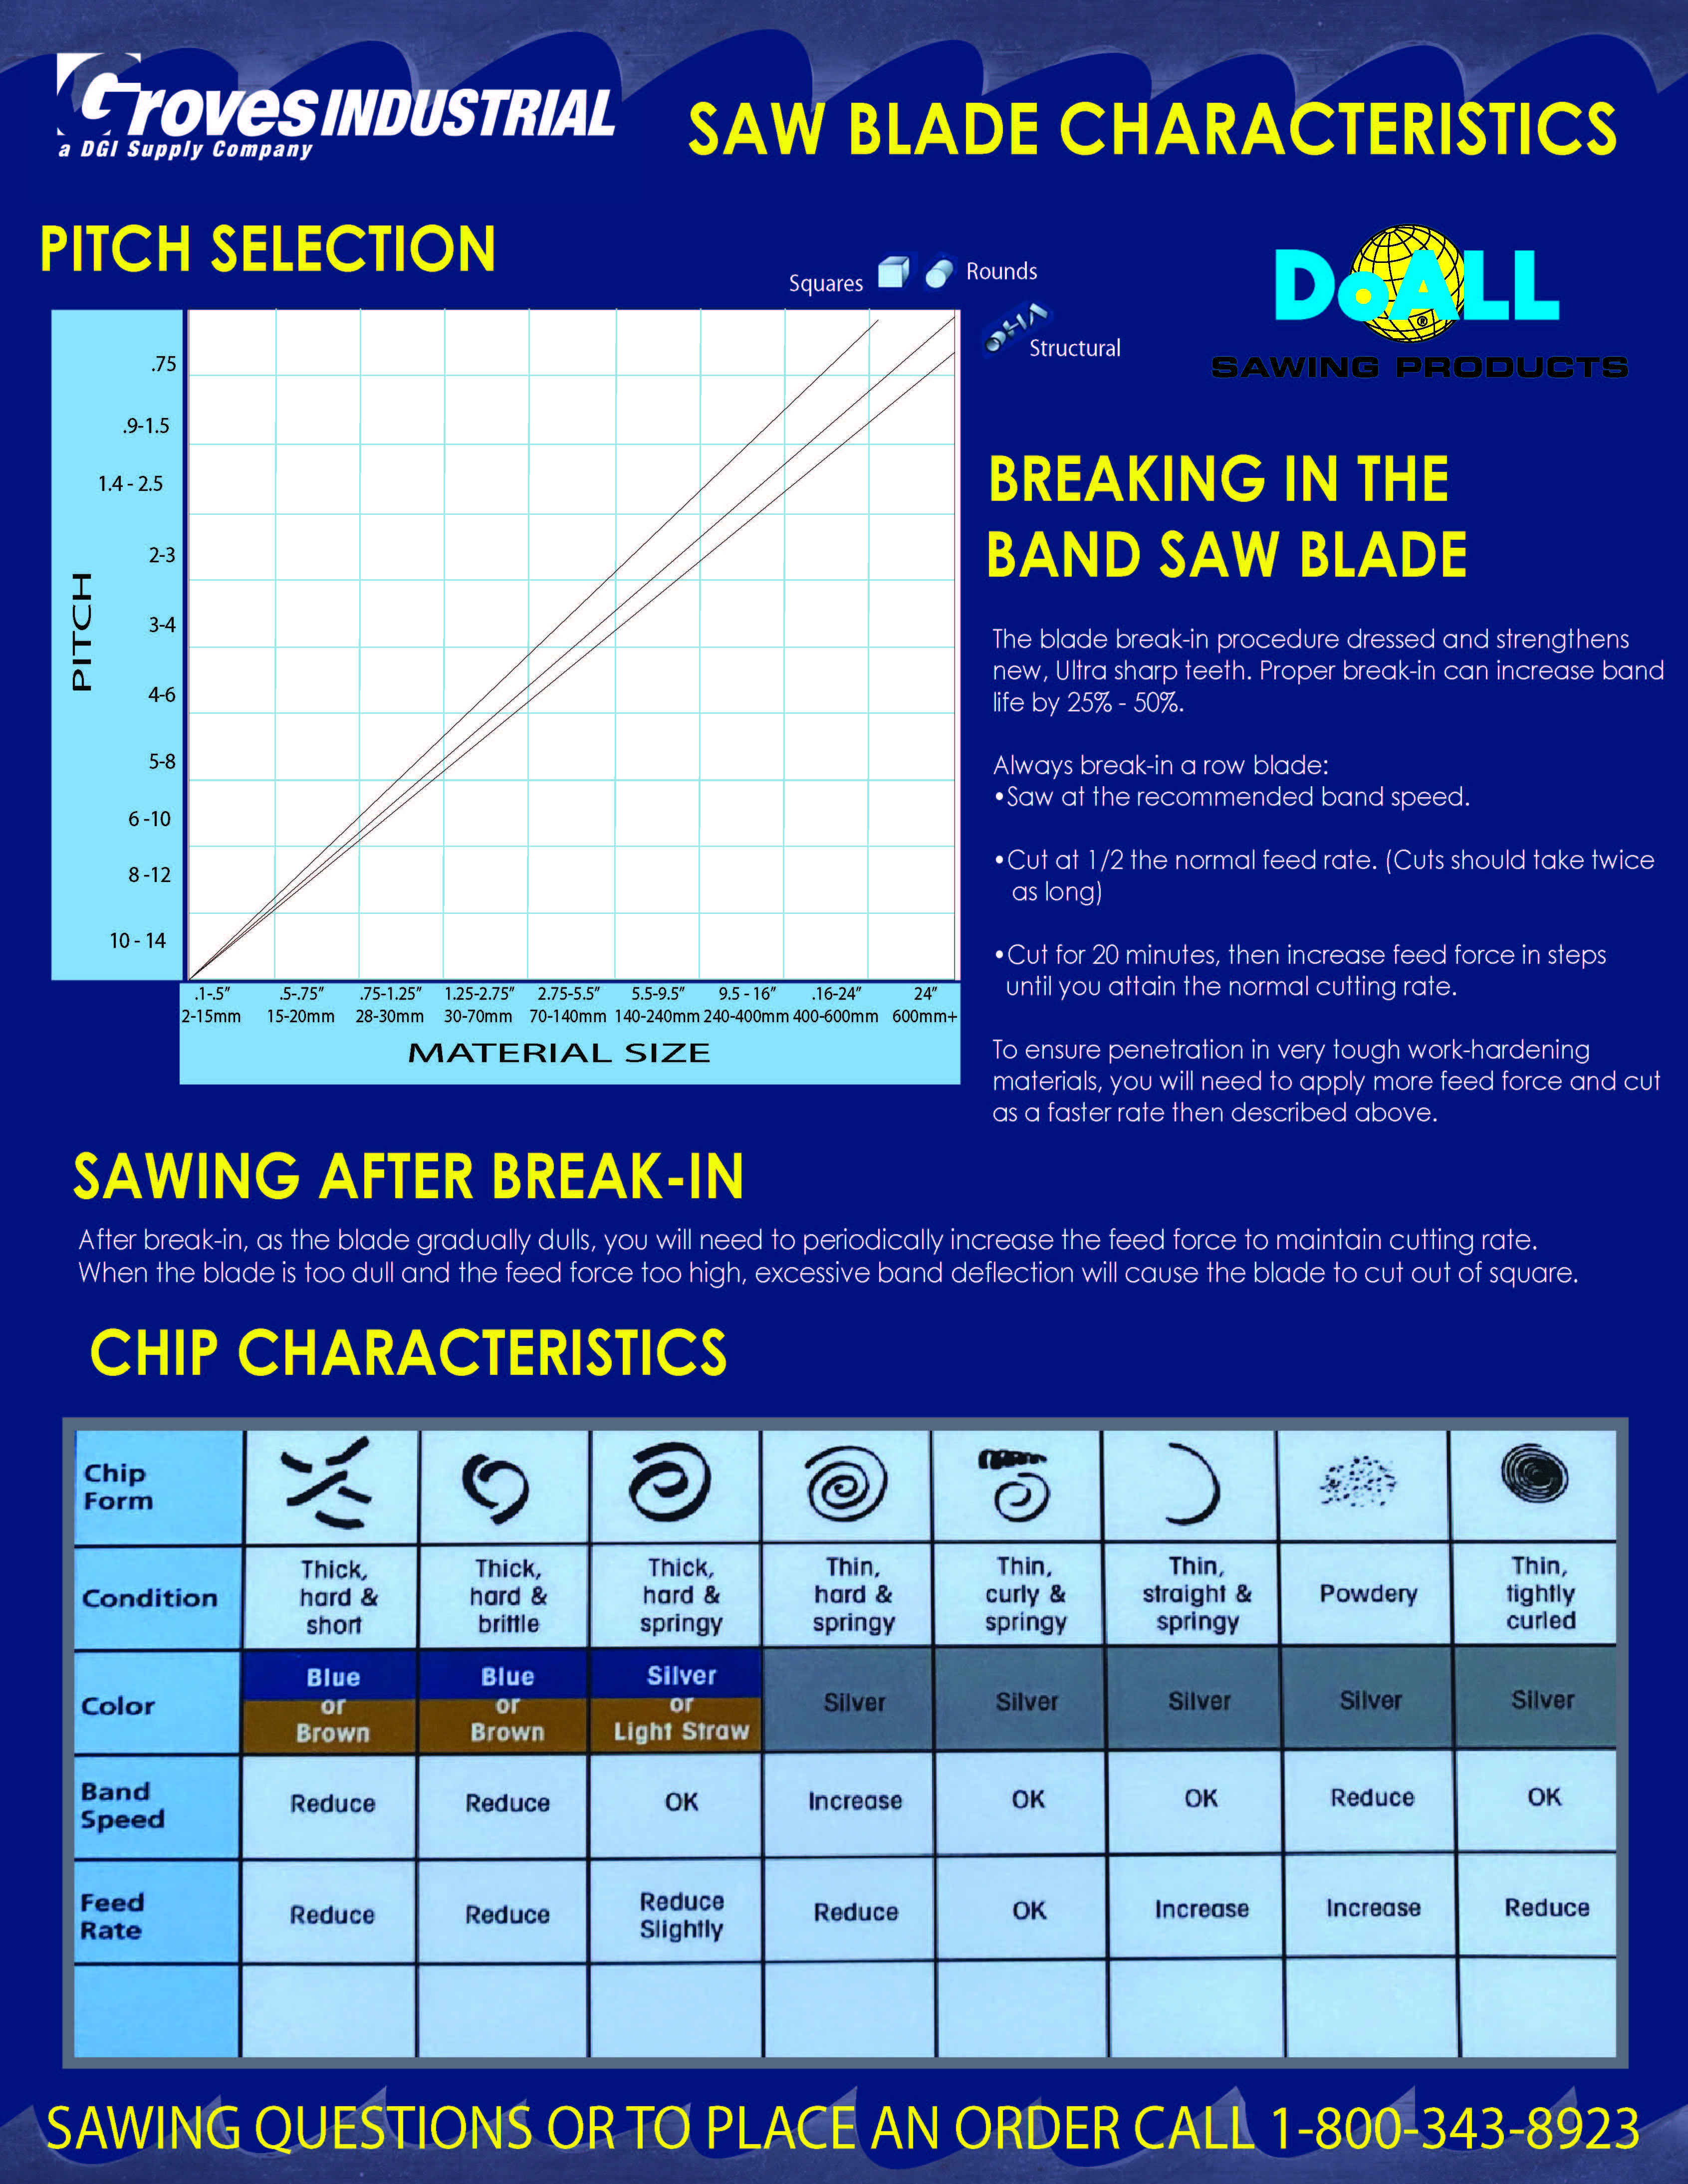 DoALL Blade Characteristics